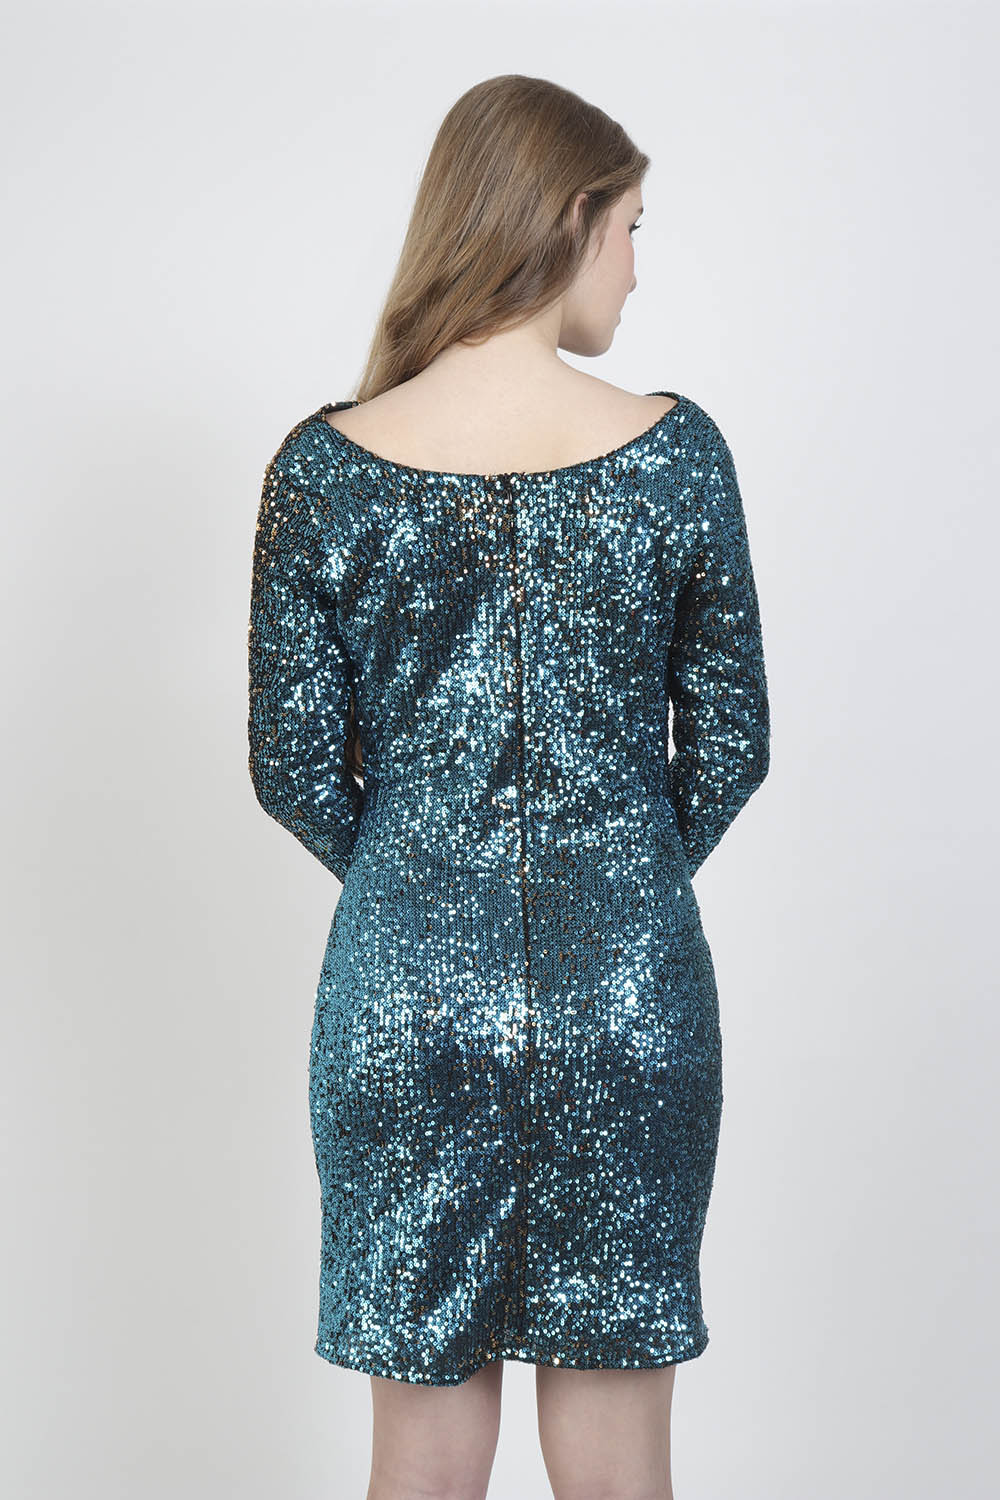 Moonlight Sequin Party Dress - Back